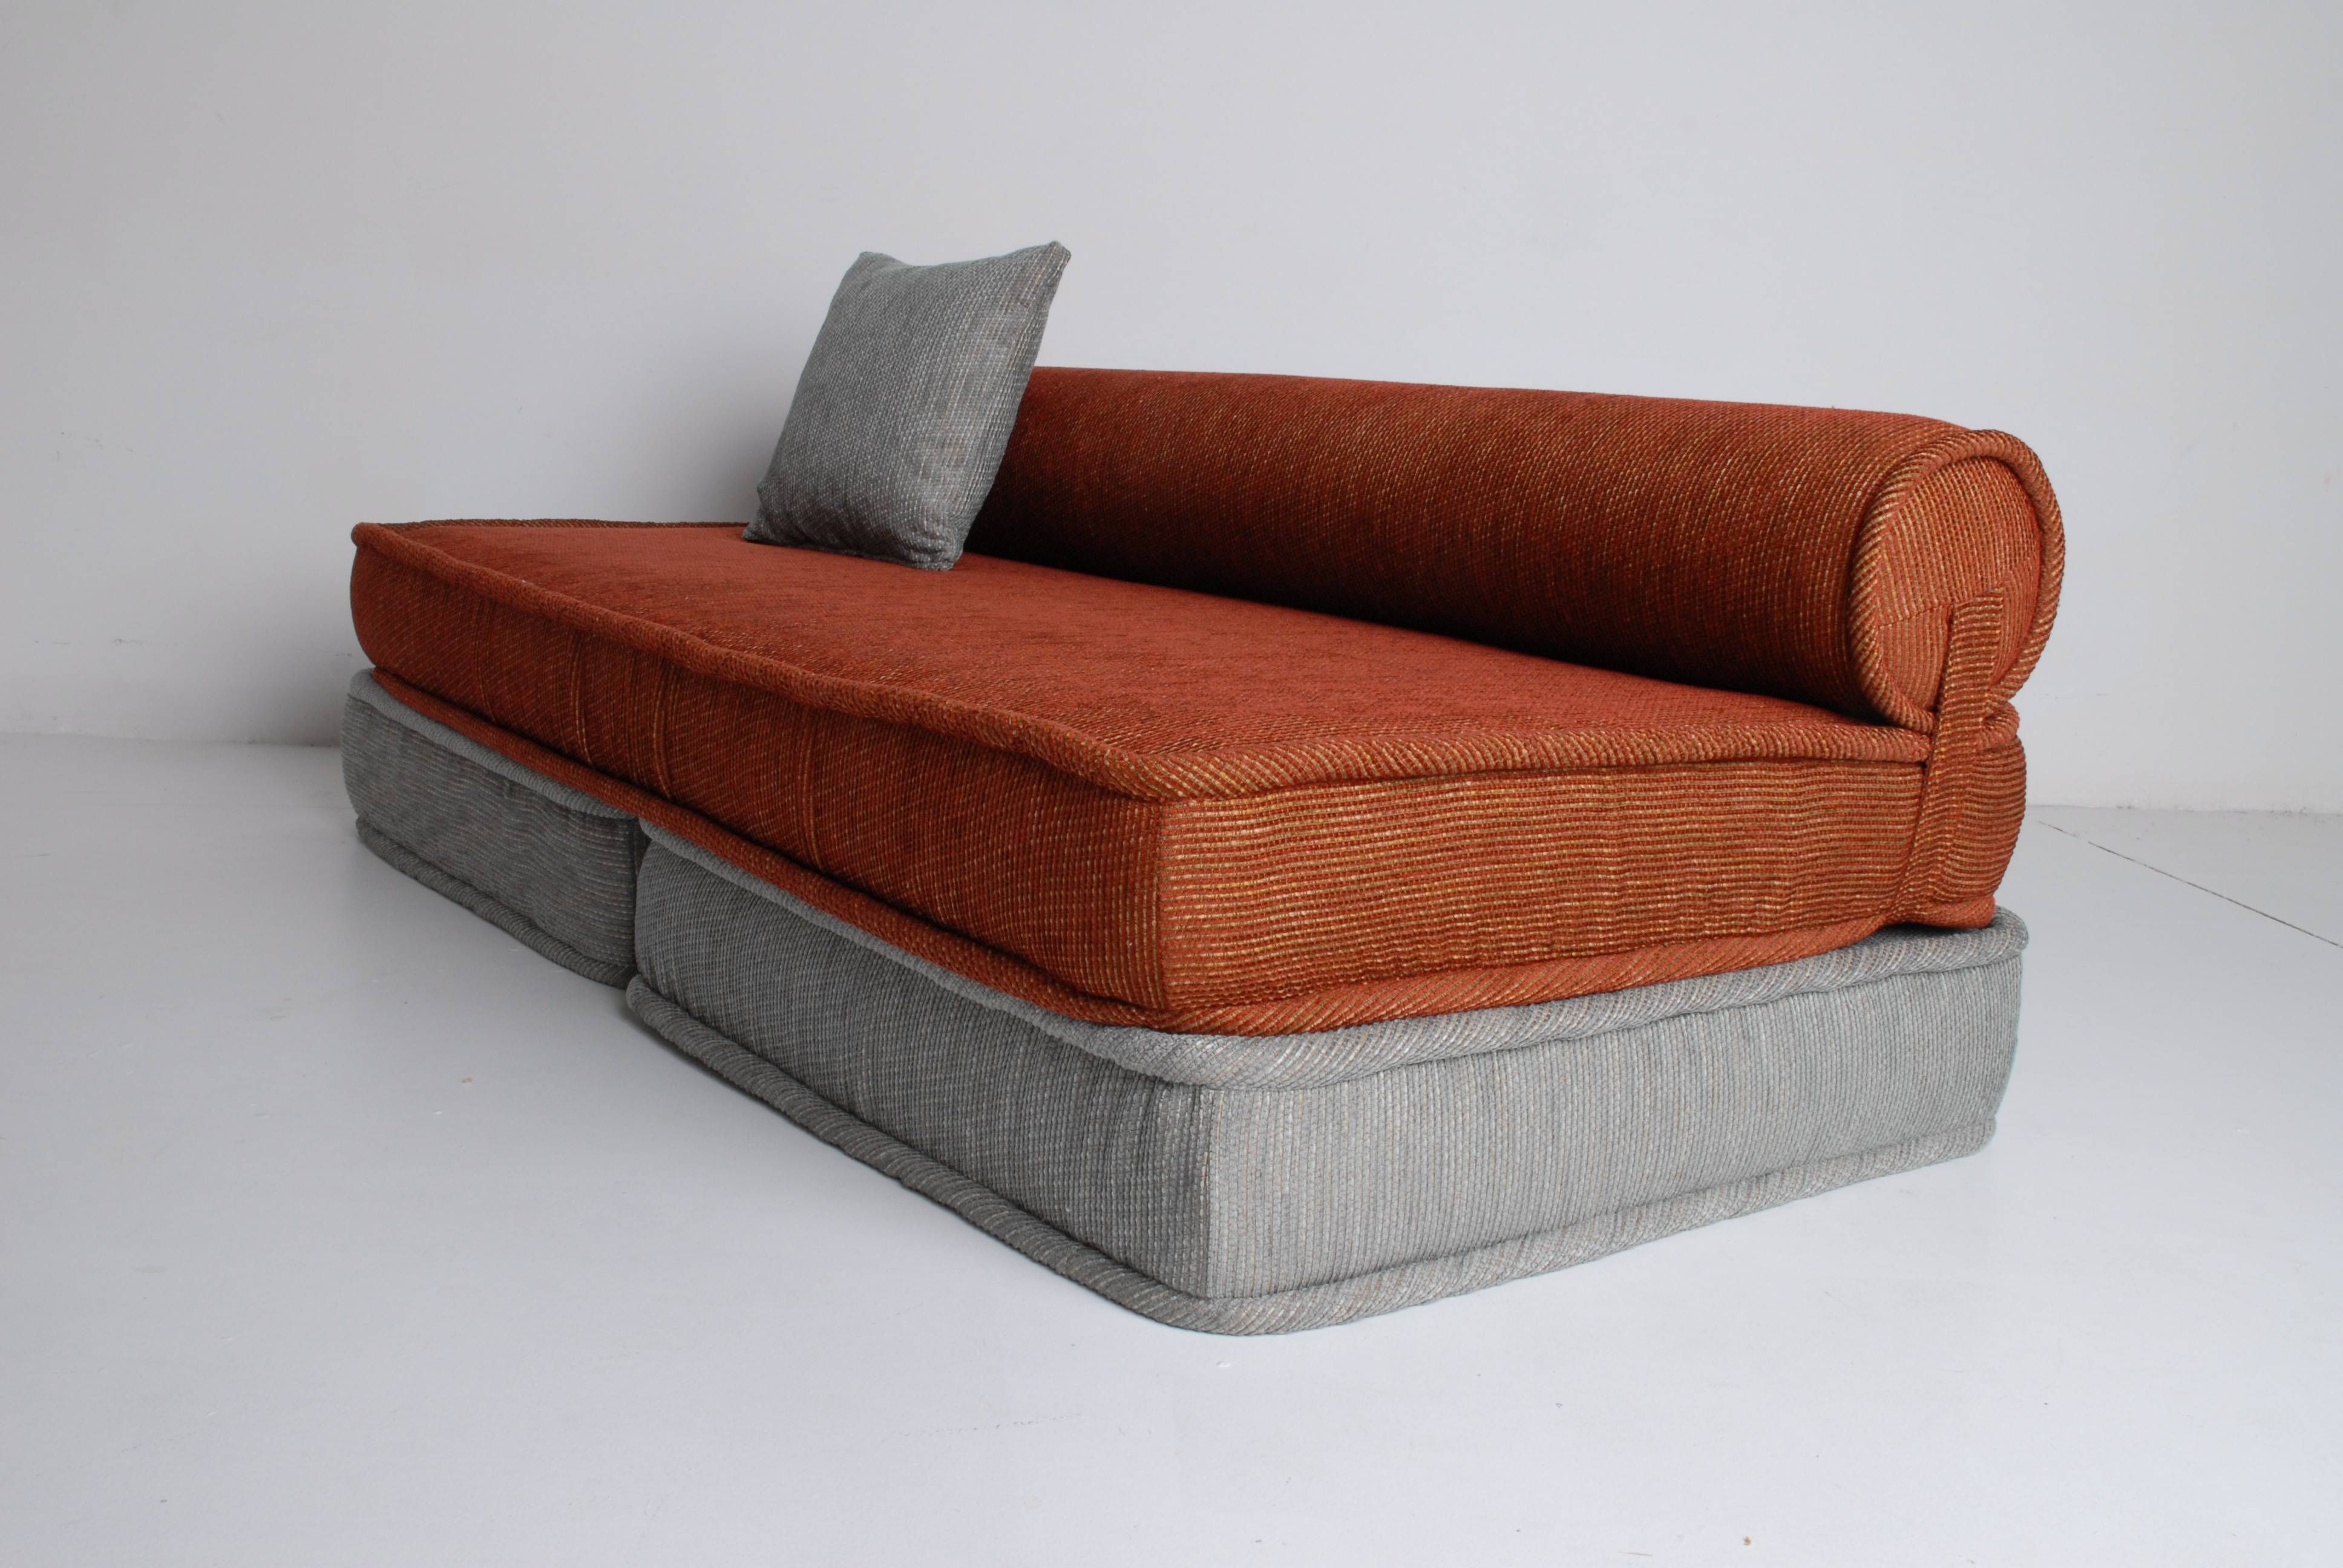 Amazing Floor Cushion Sofa Pictures Decoration Ideas Tikspor For Floor Cushion Sofas 